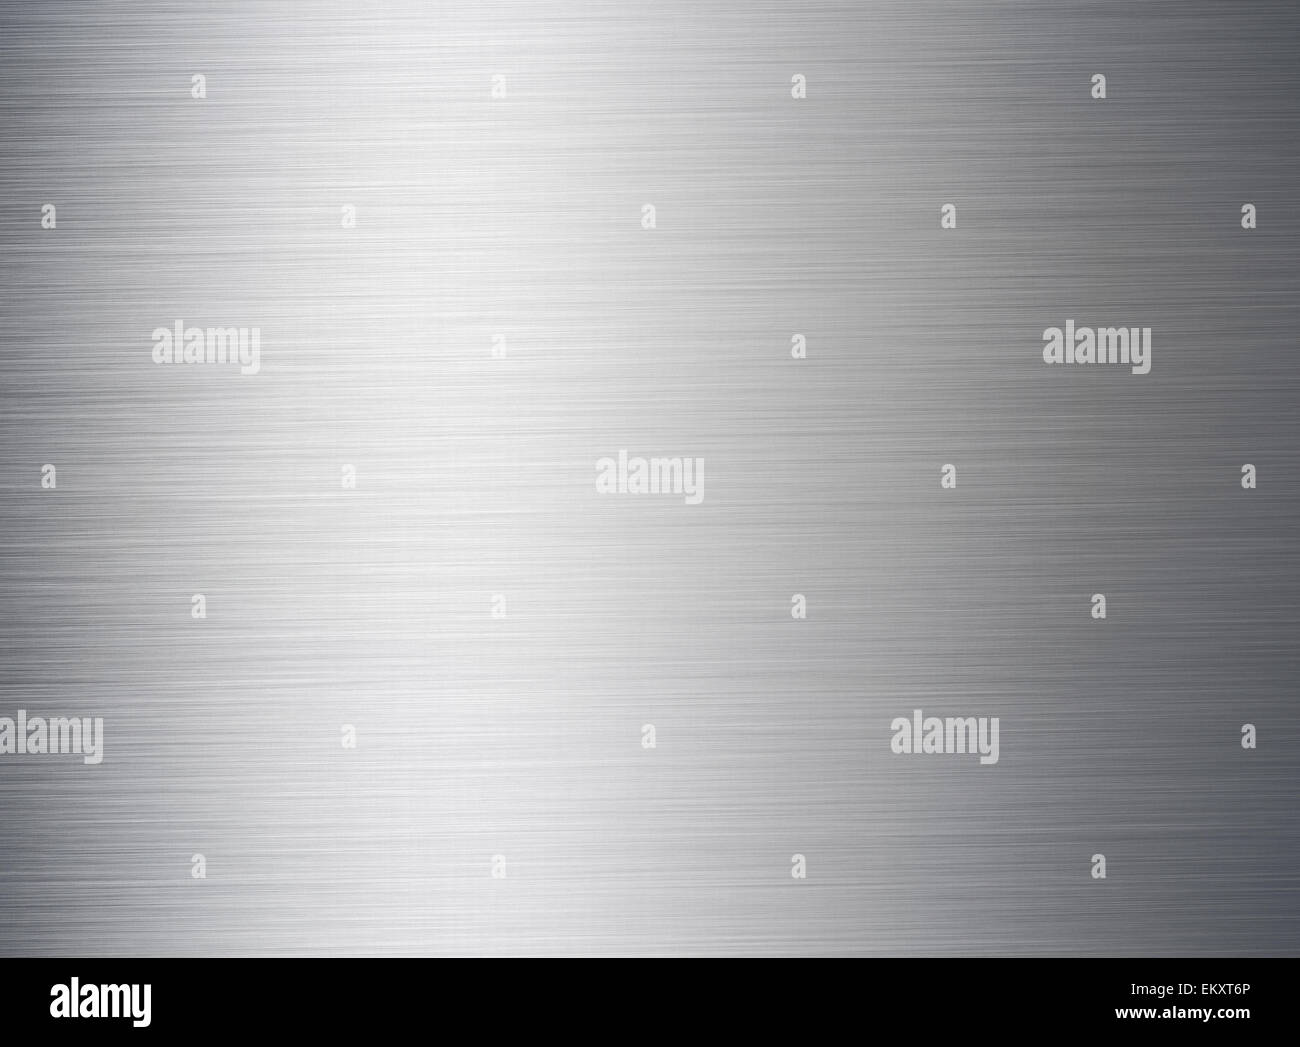 brushed silver metallic background Stock Photo - Alamy